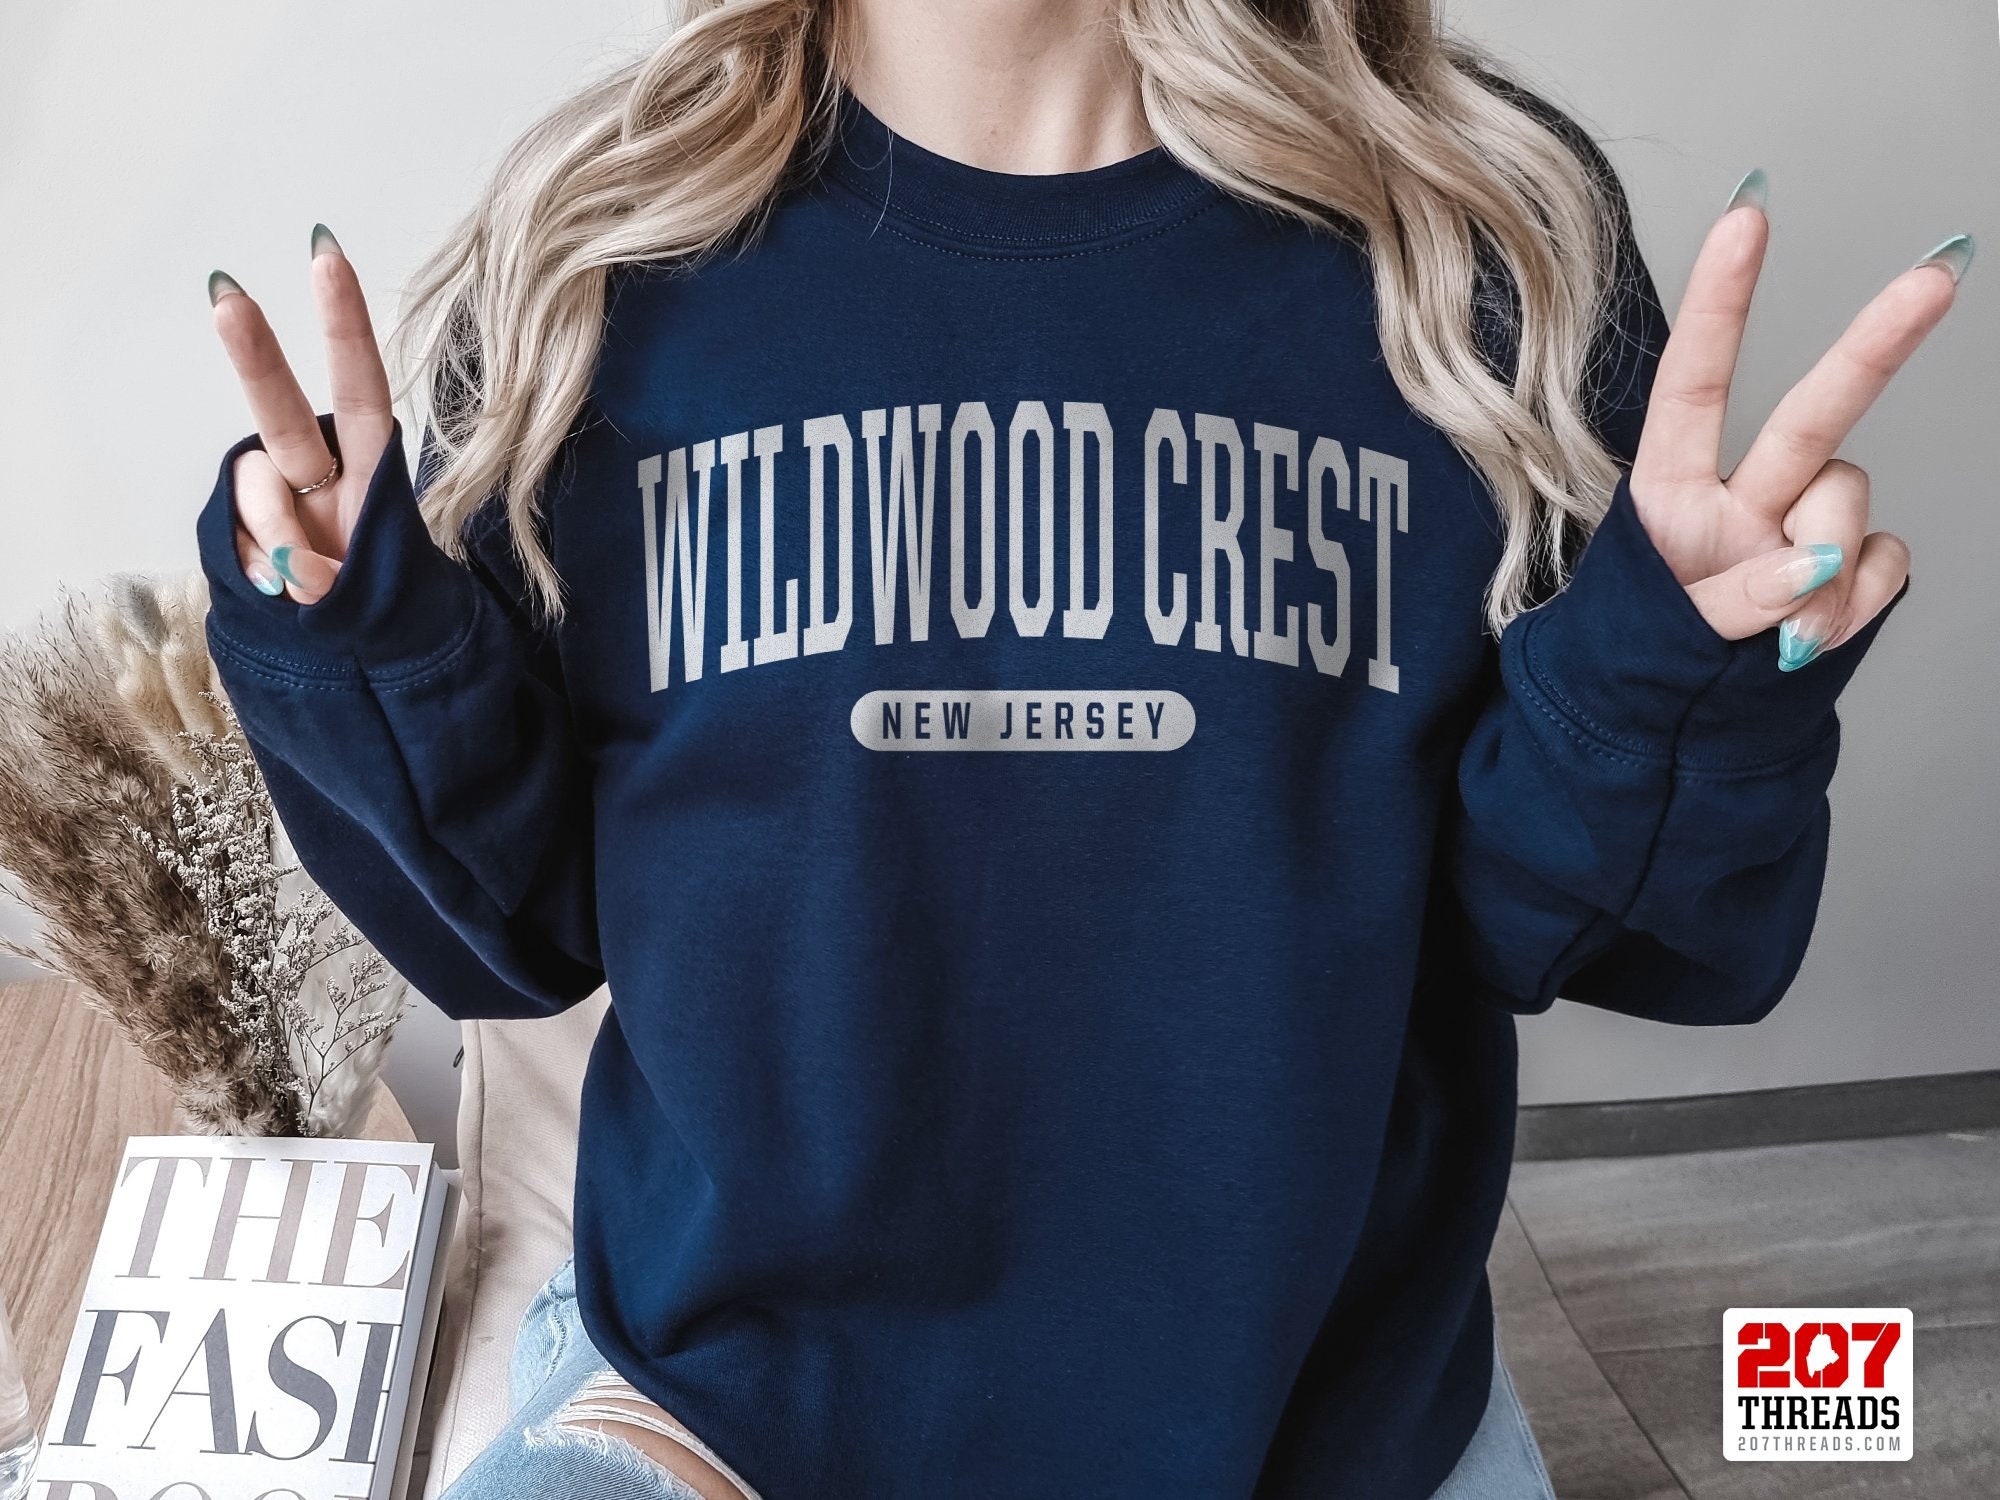 Crest Sweatshirt